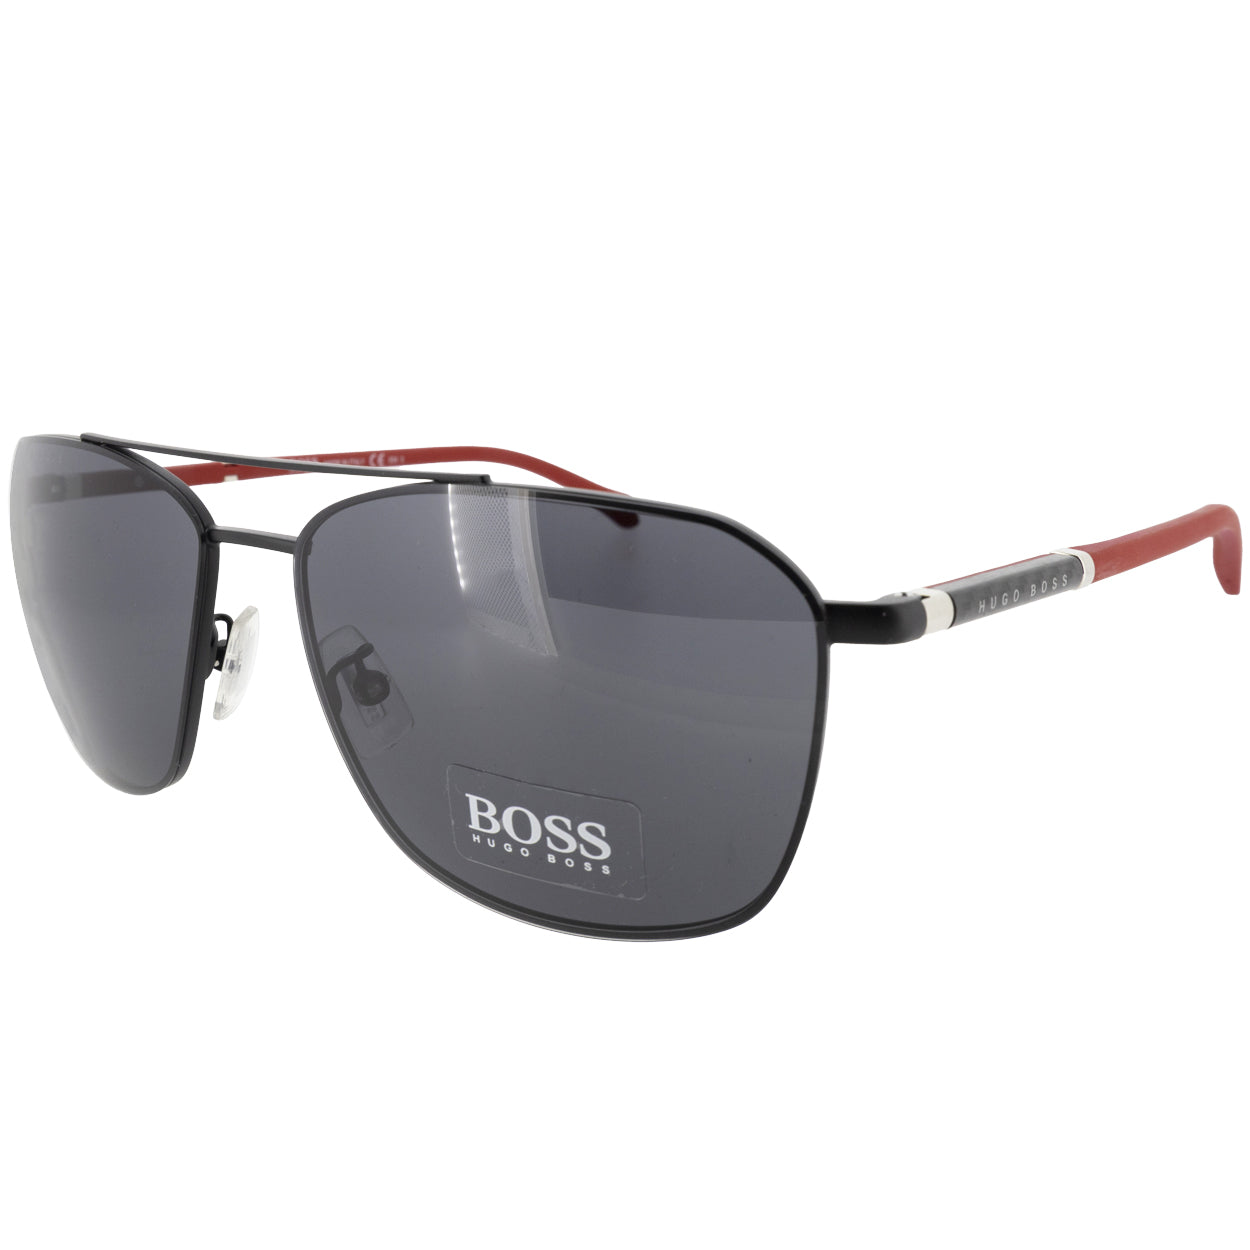 Hugo Boss Black & Red Men's Sunglasses 1103 003 *Ex Display*